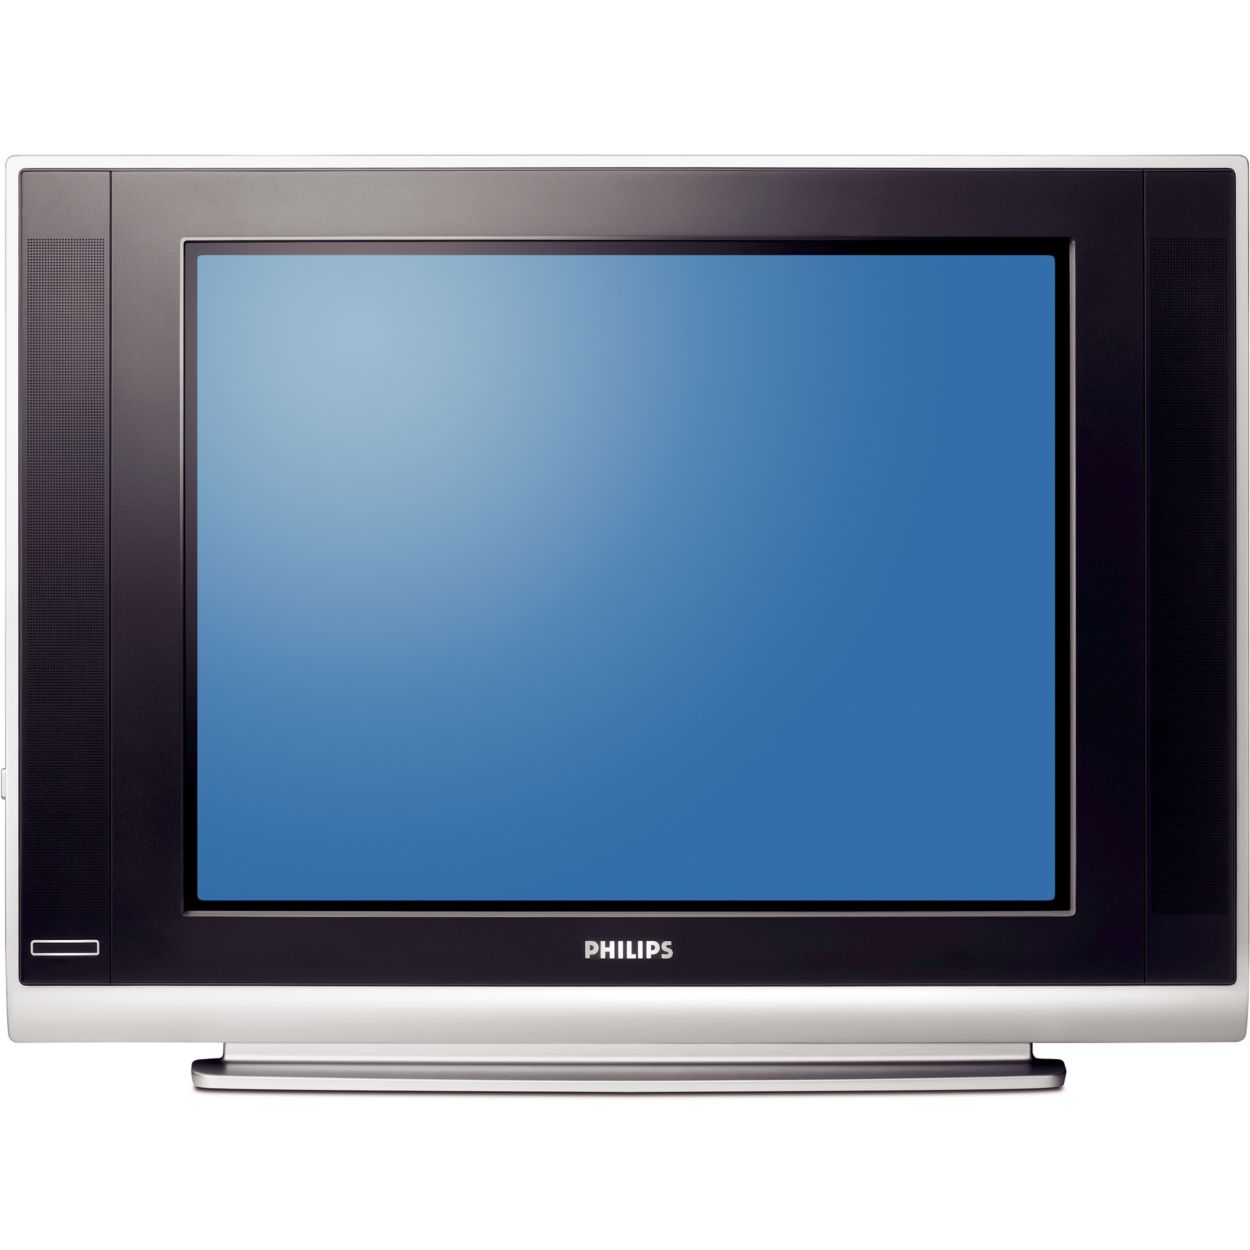 Philips Flat TV 2003